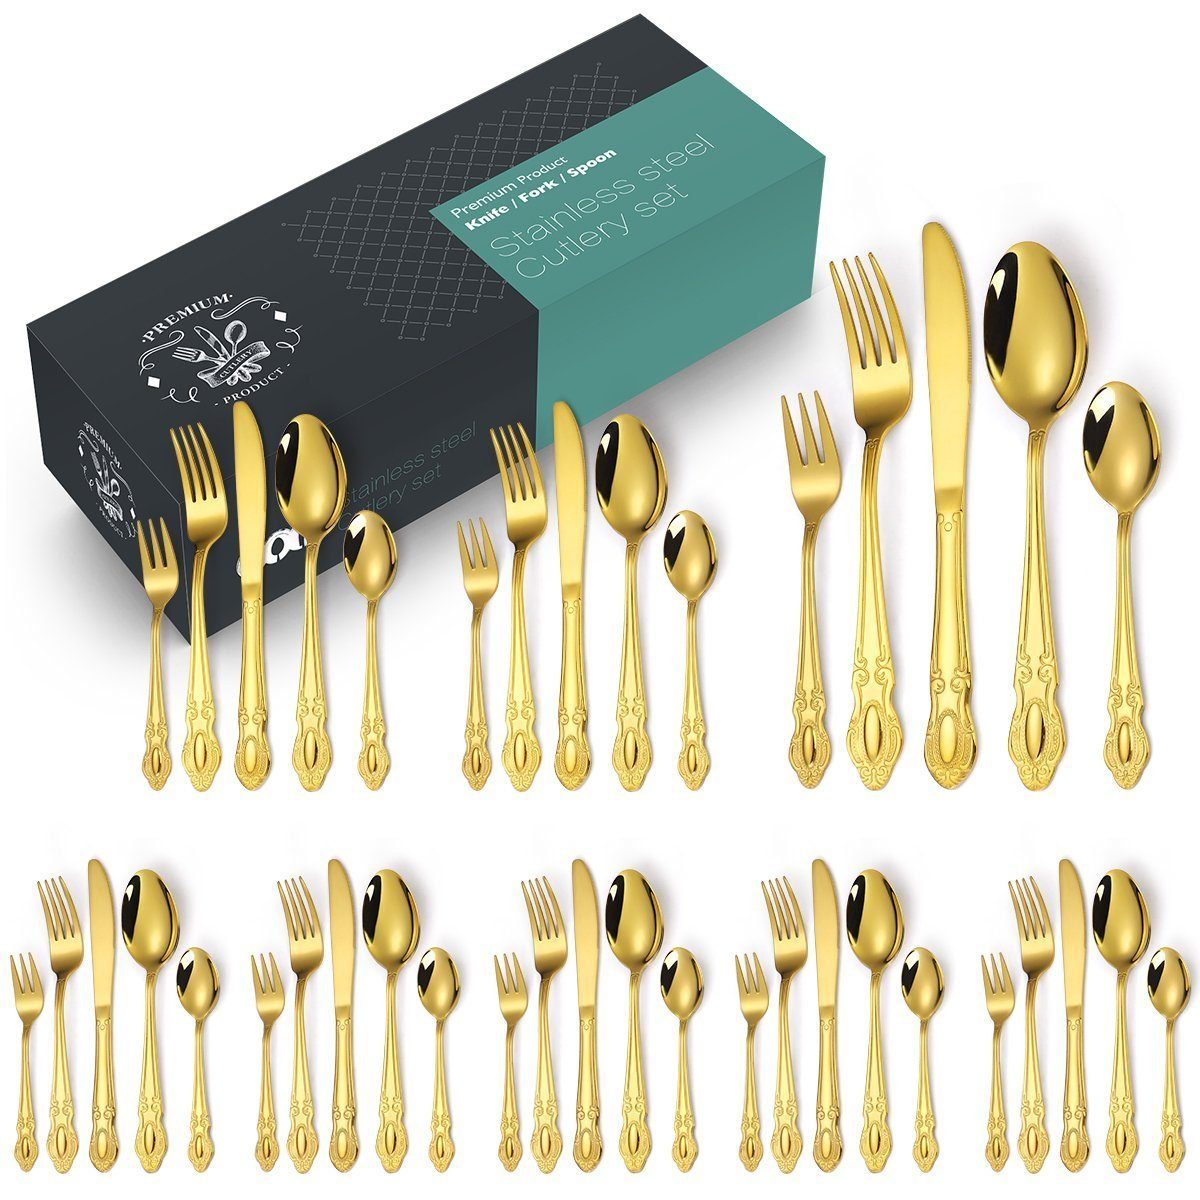 Coisini Besteck-Set 40teilig Elegant Besteck Set 8 Personen Luxury Royal poliert glänzend Gold